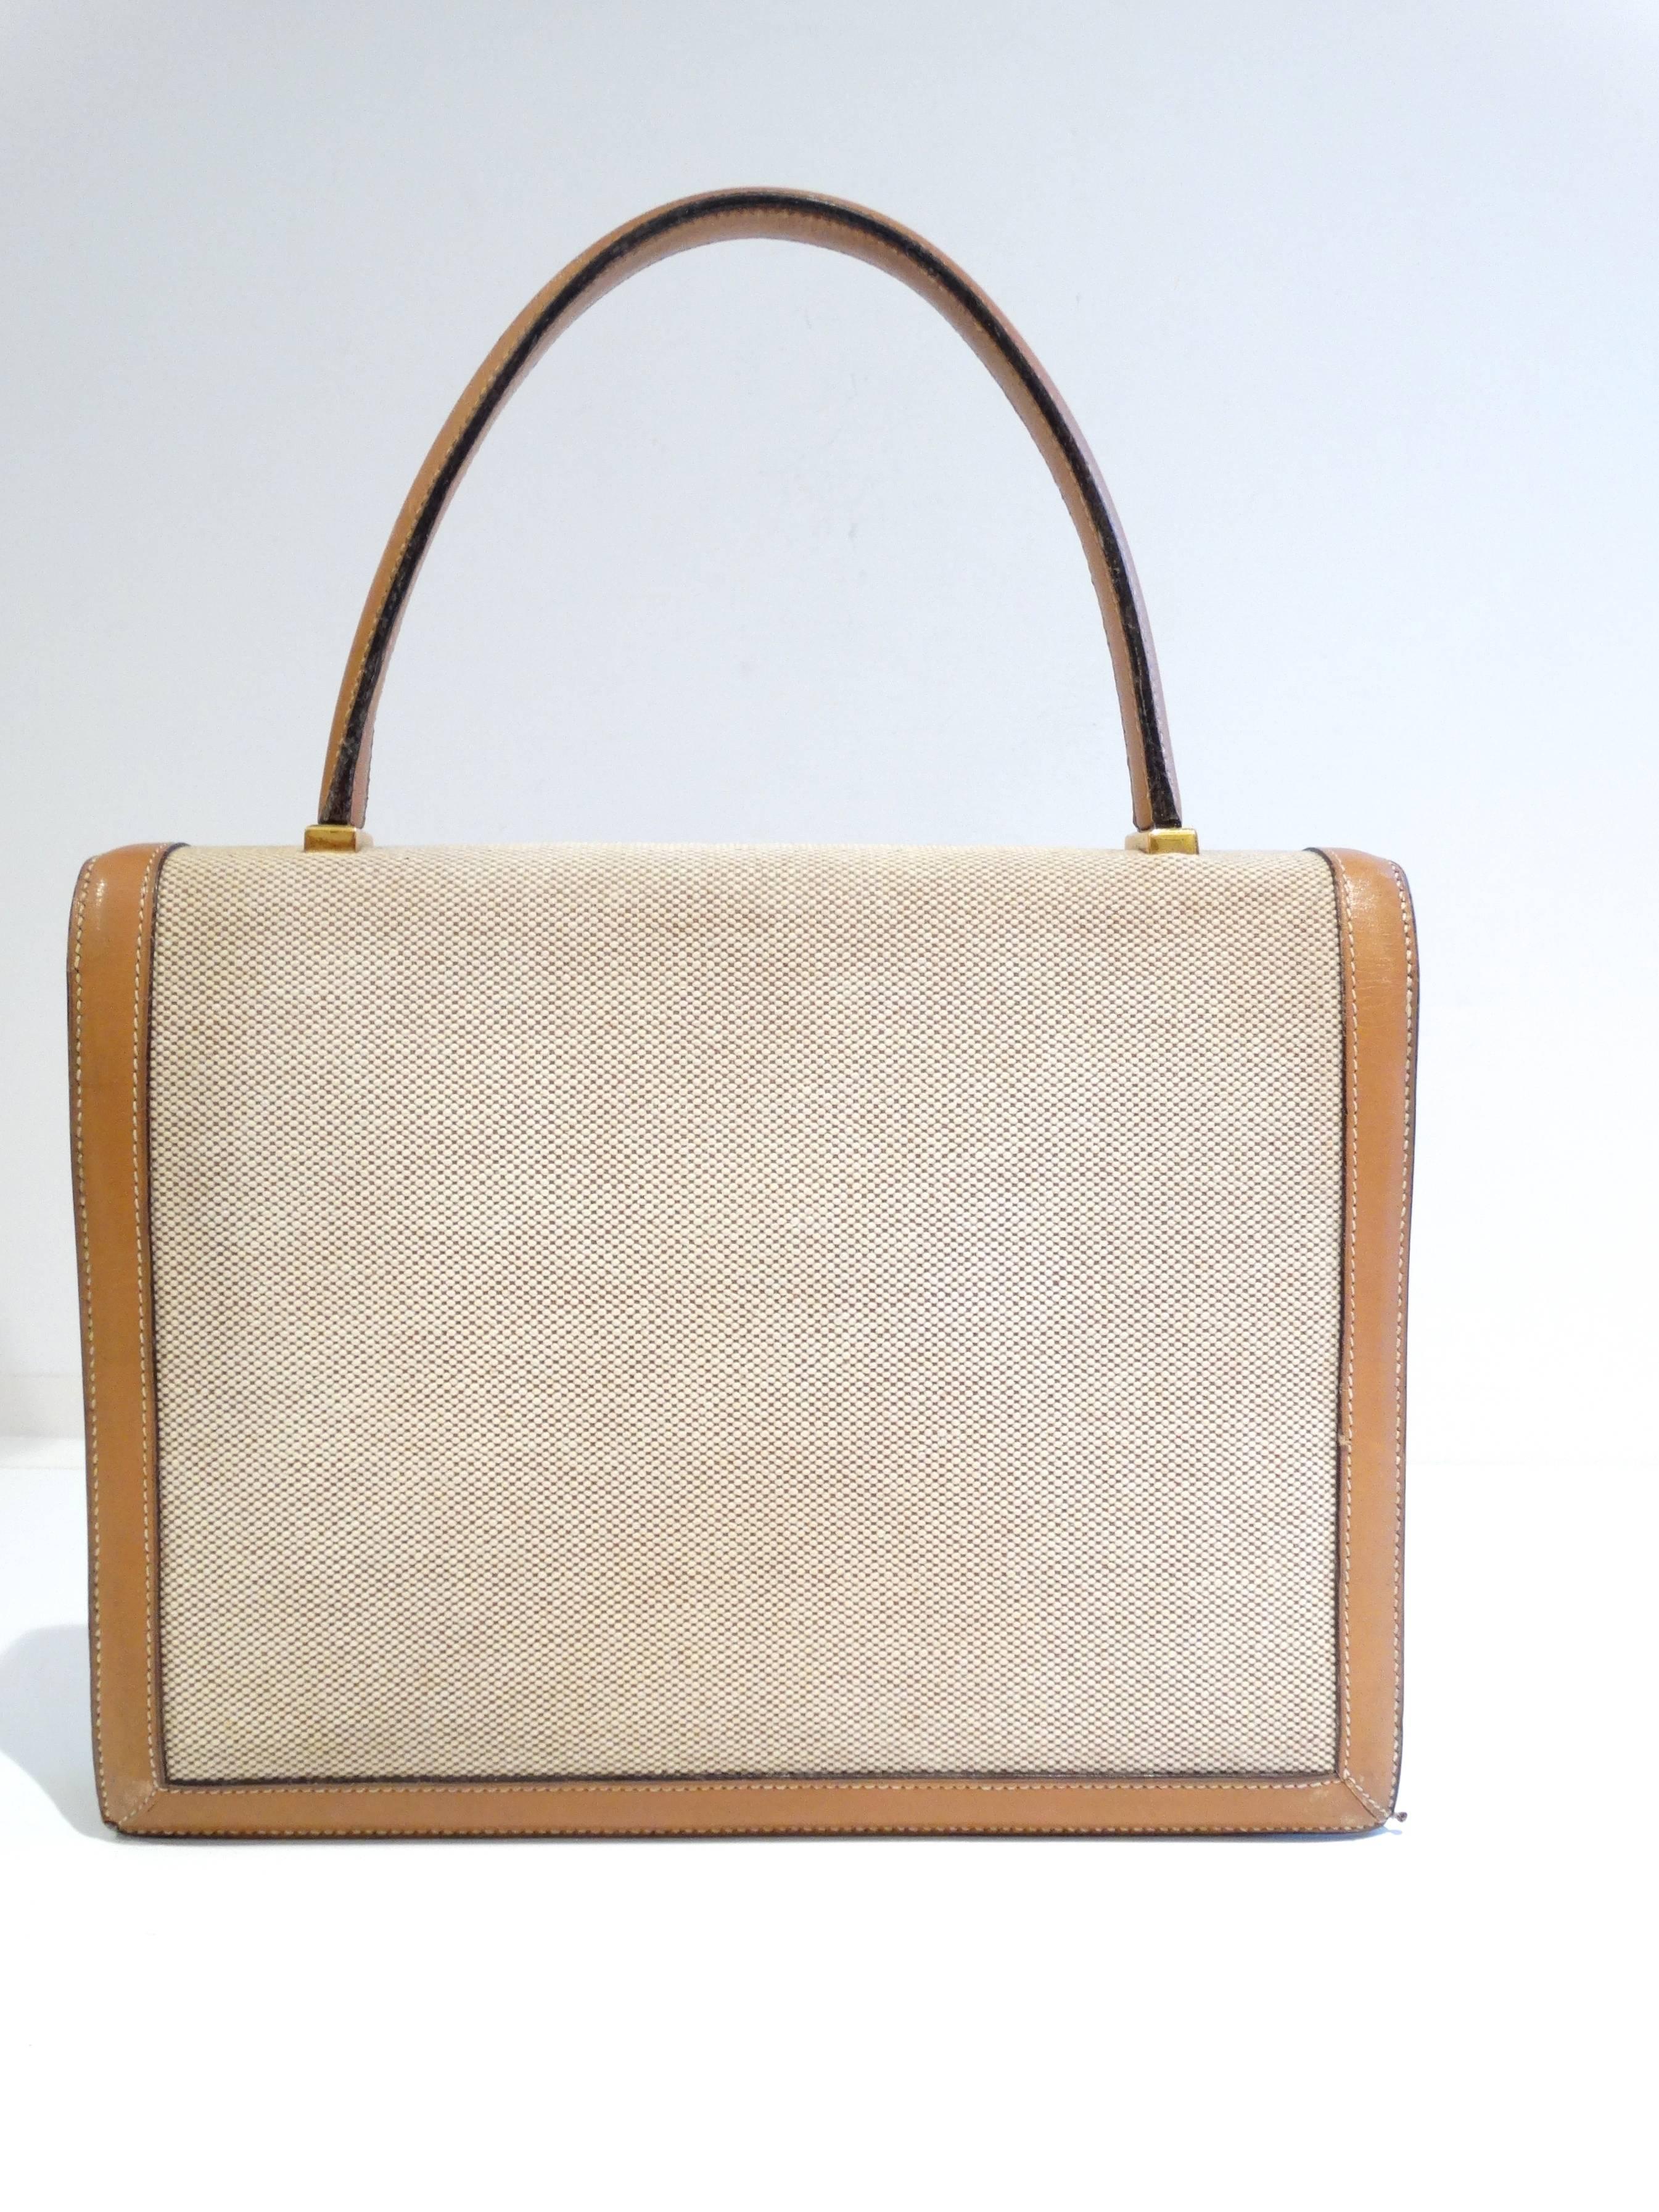 Hermes Tan Canvas Box Leather Top Handle Handbag, 1960s For Sale at ...